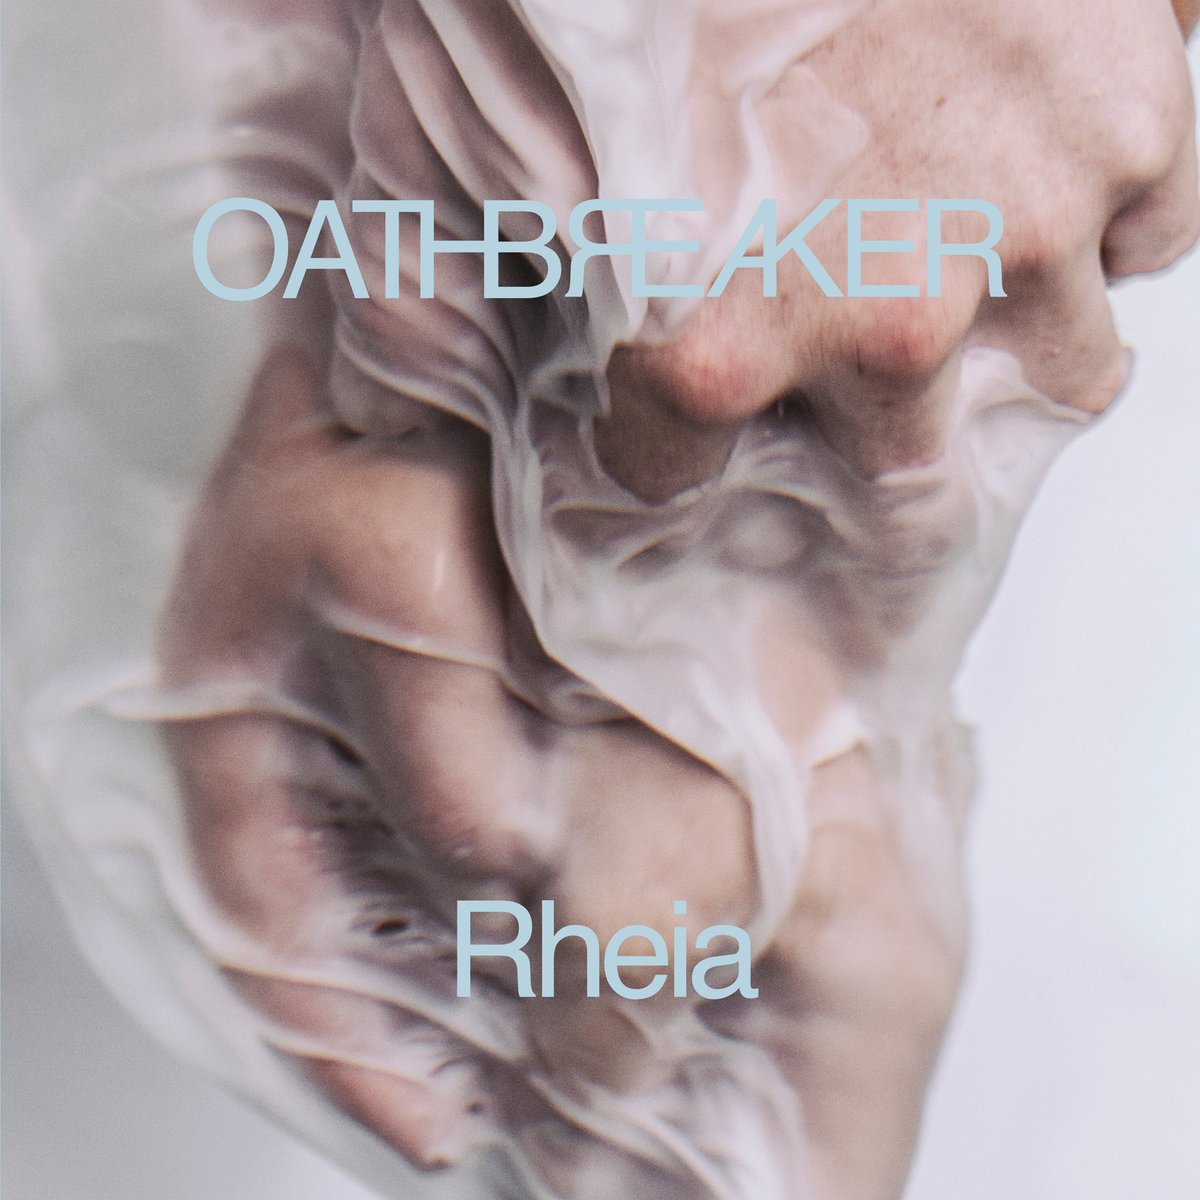 oathbreaker-rheia-cover-ghostcultmag